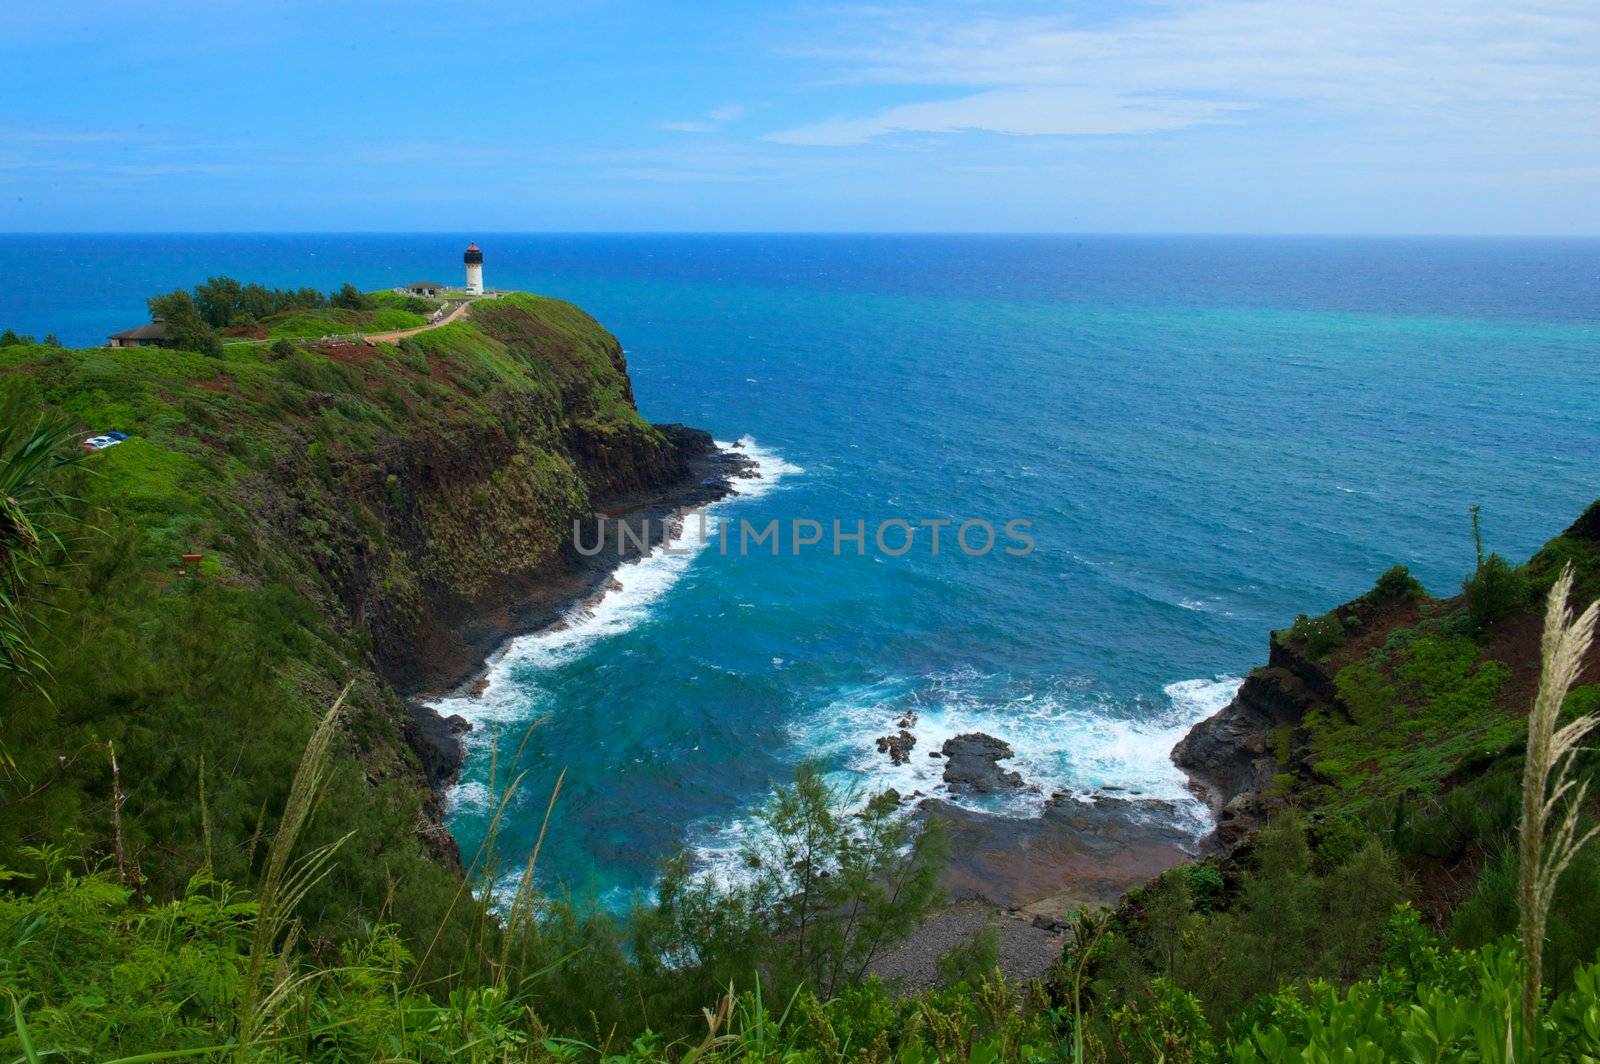 This is a shot of the white lighthouse on the Hawaiian island of Kauai